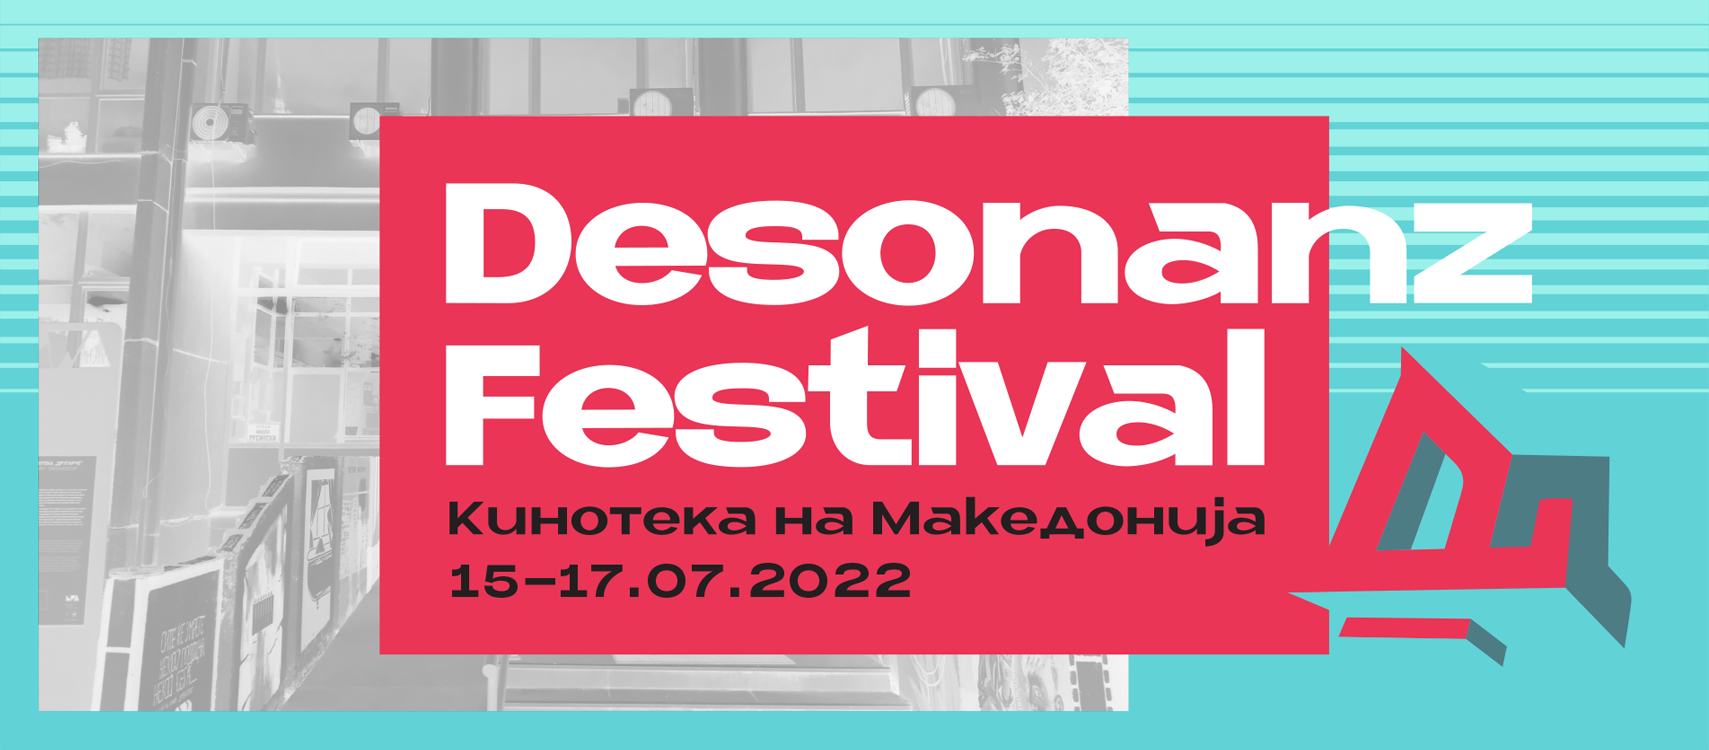 Десонанз Фестивал 2022